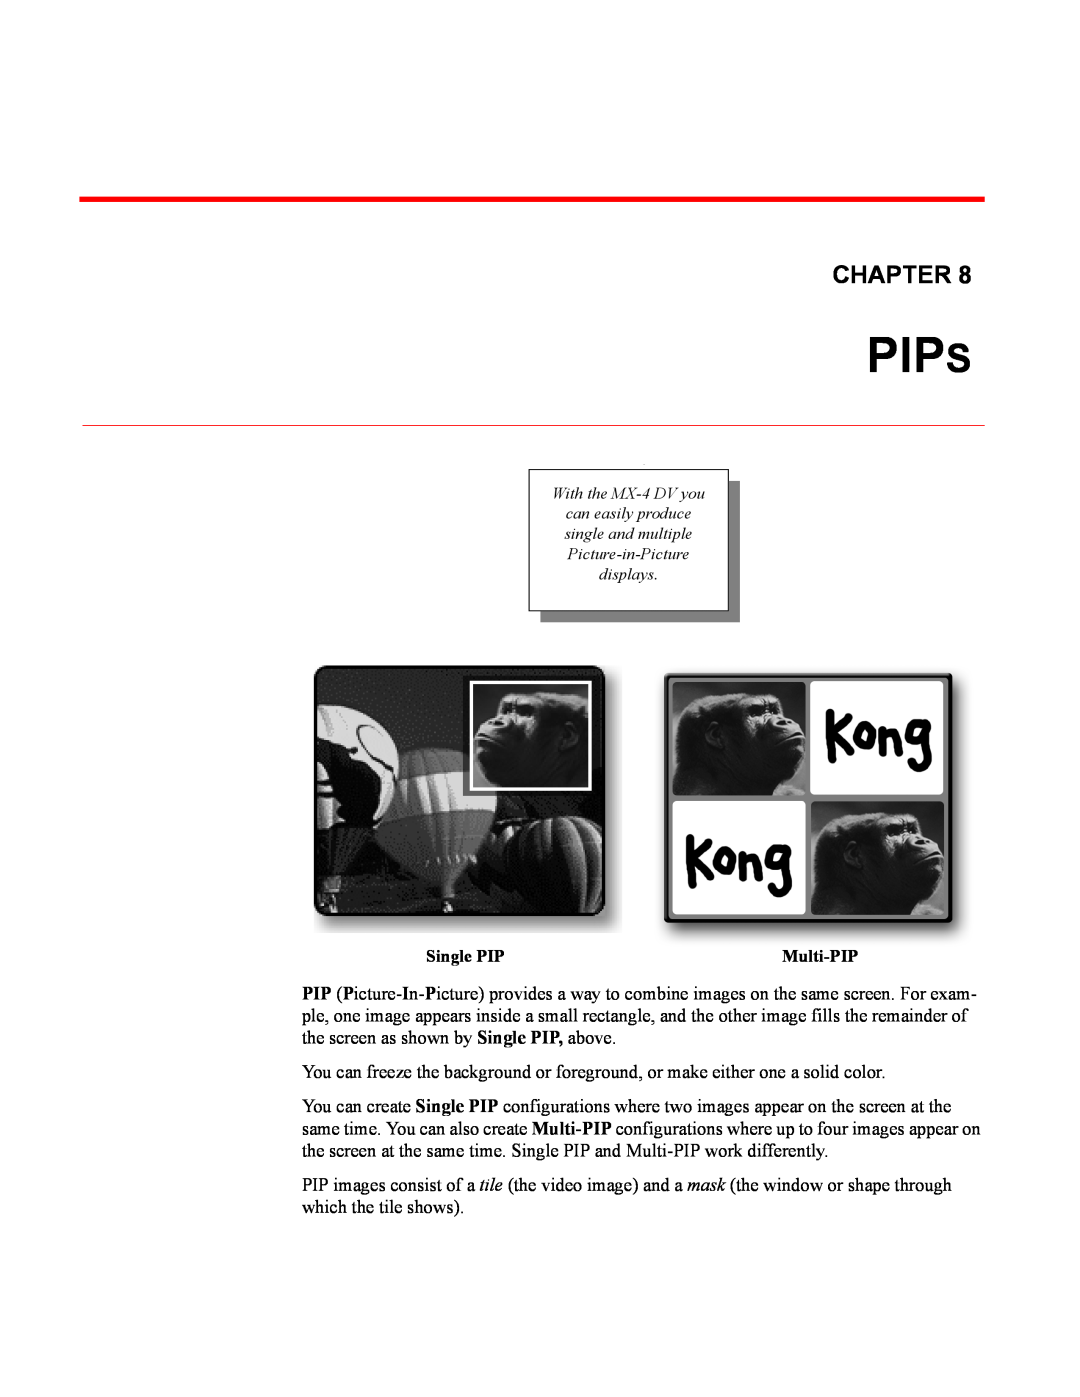 FOCUS Enhancements MX-4DV manual Pips, Chapter, Single PIP, Multi-PIP 